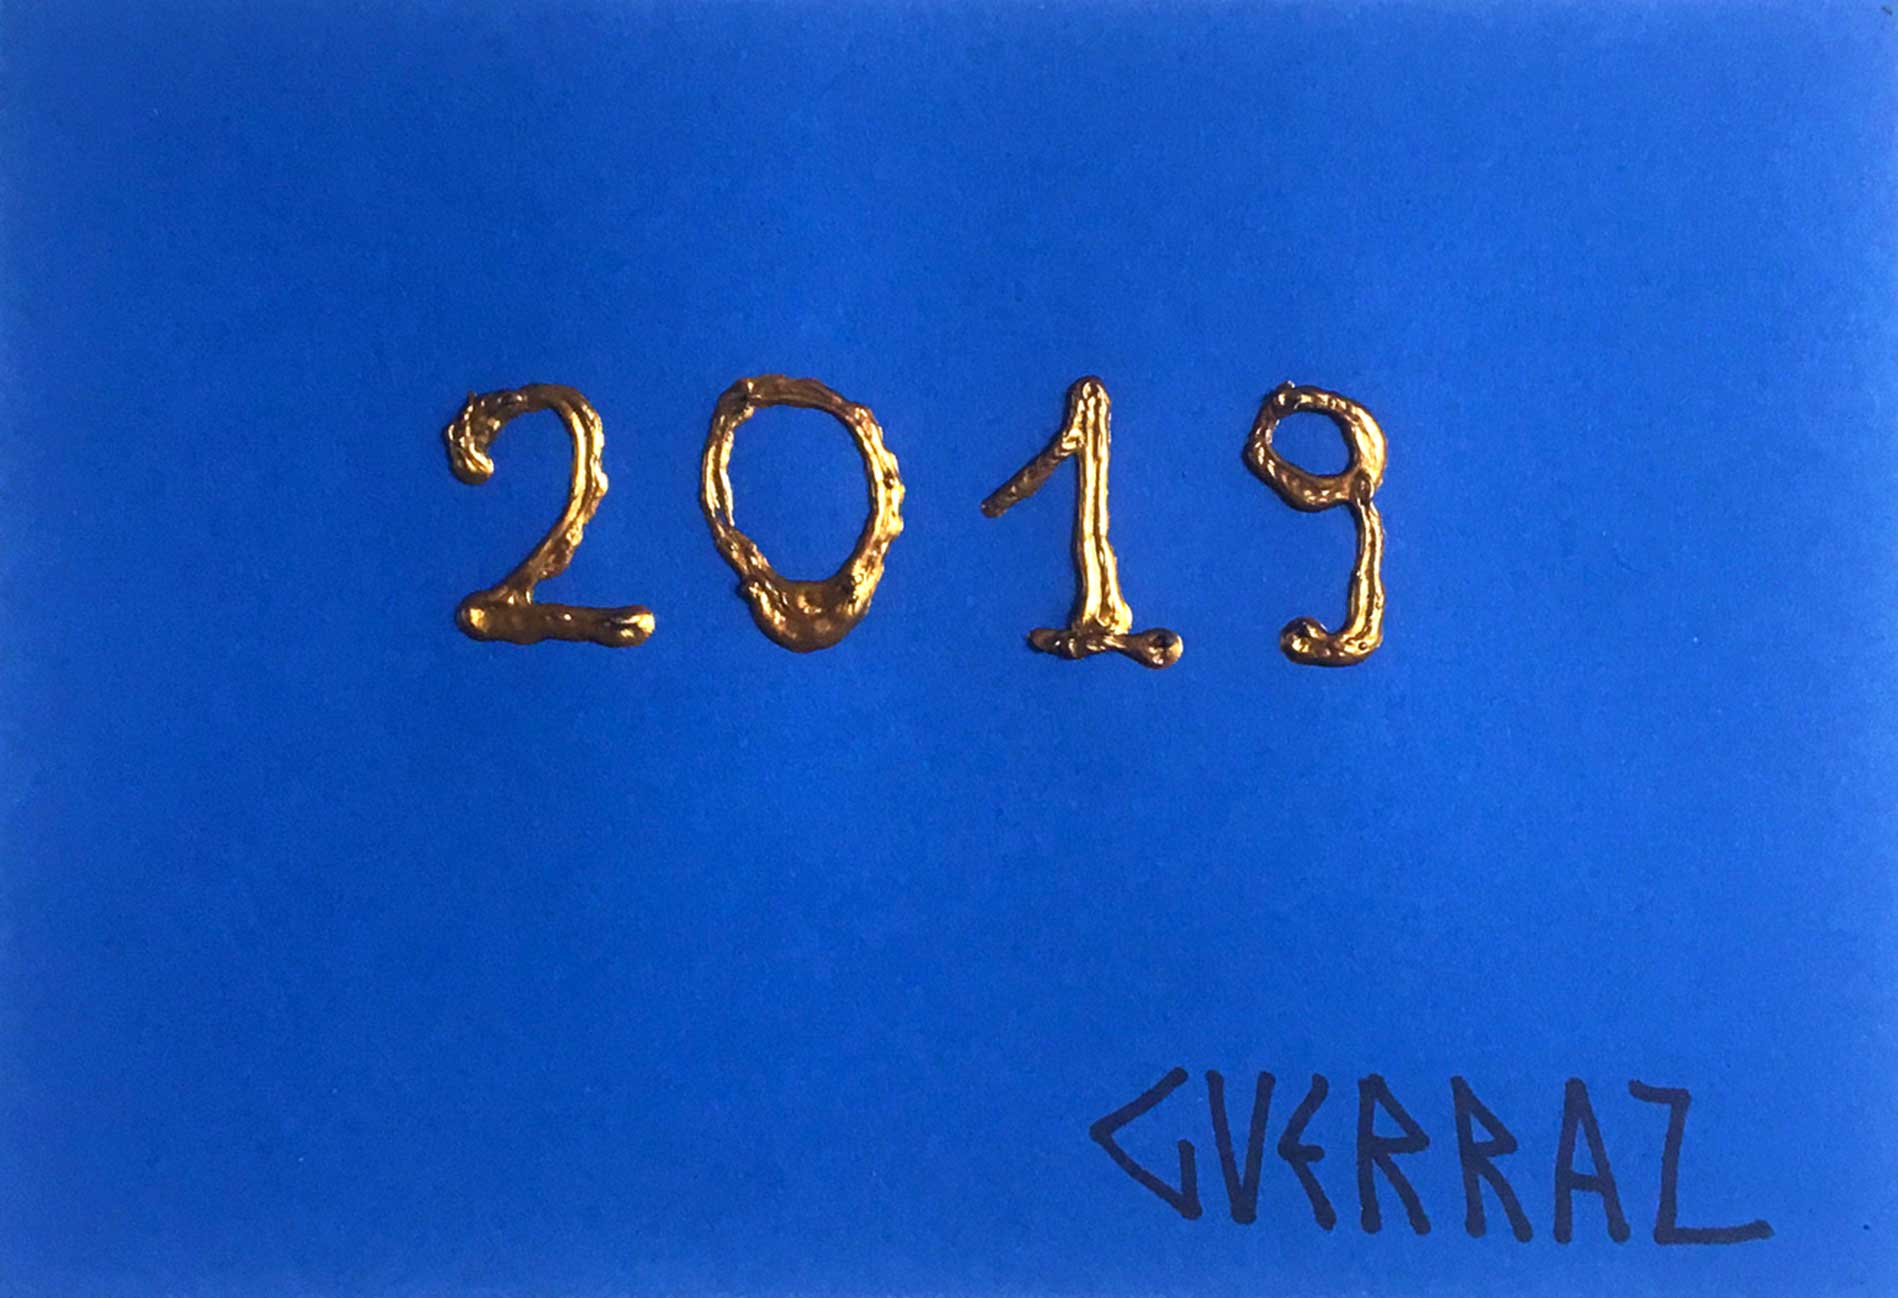 Press - Invitations, Nicola Guerraz, year 2019